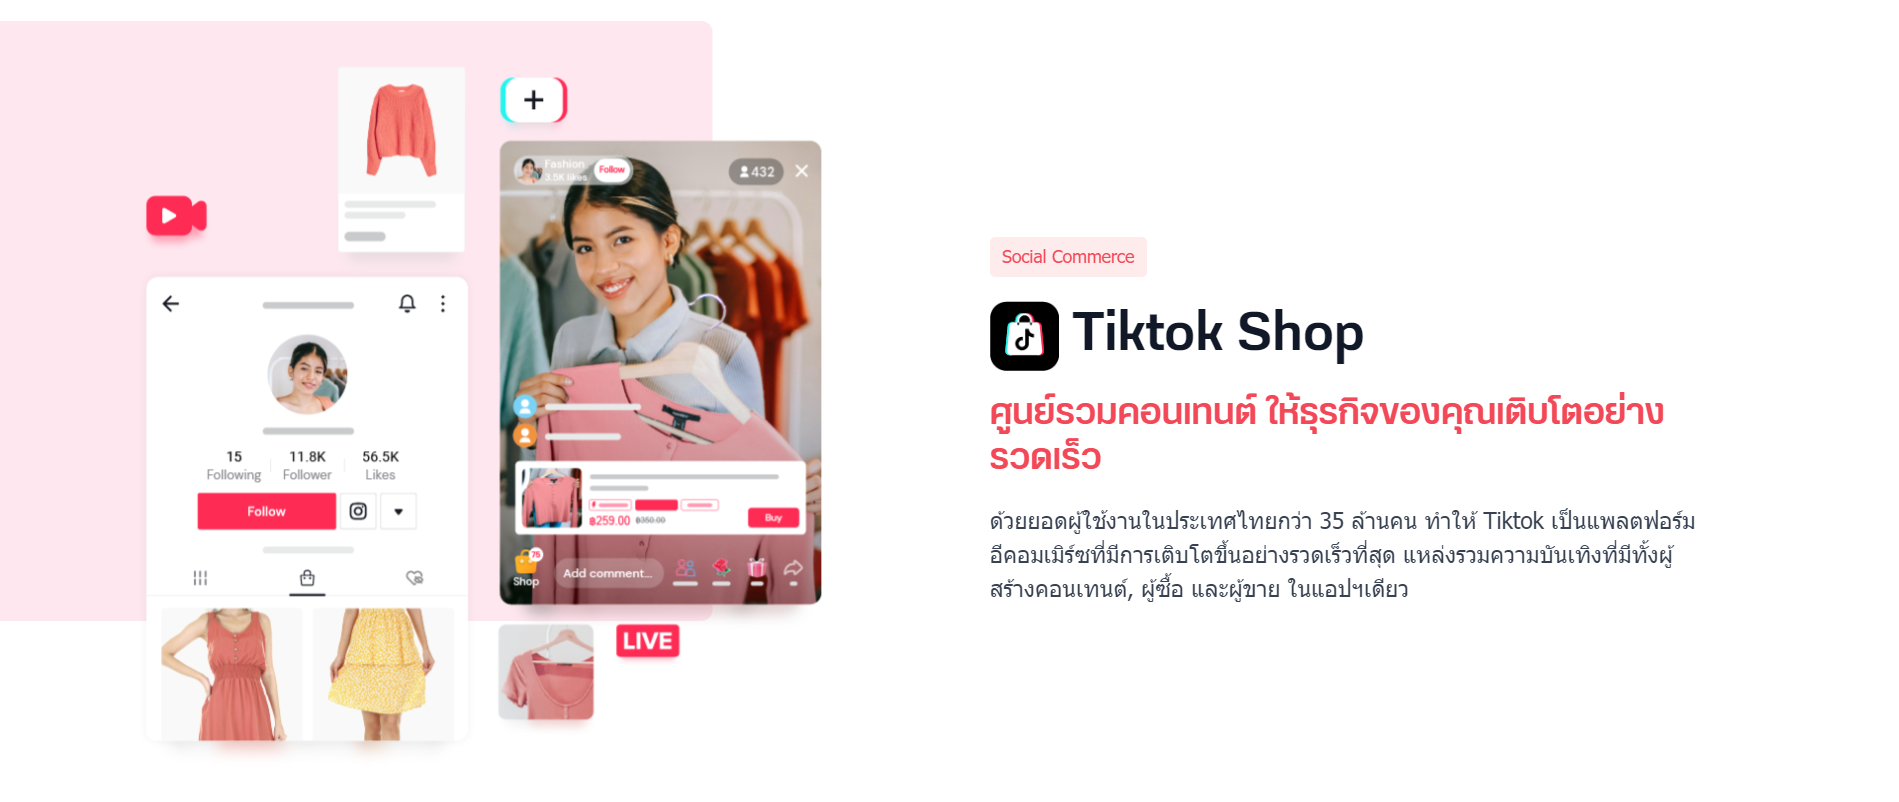 TikTok Shop information on LnwShop  Channels